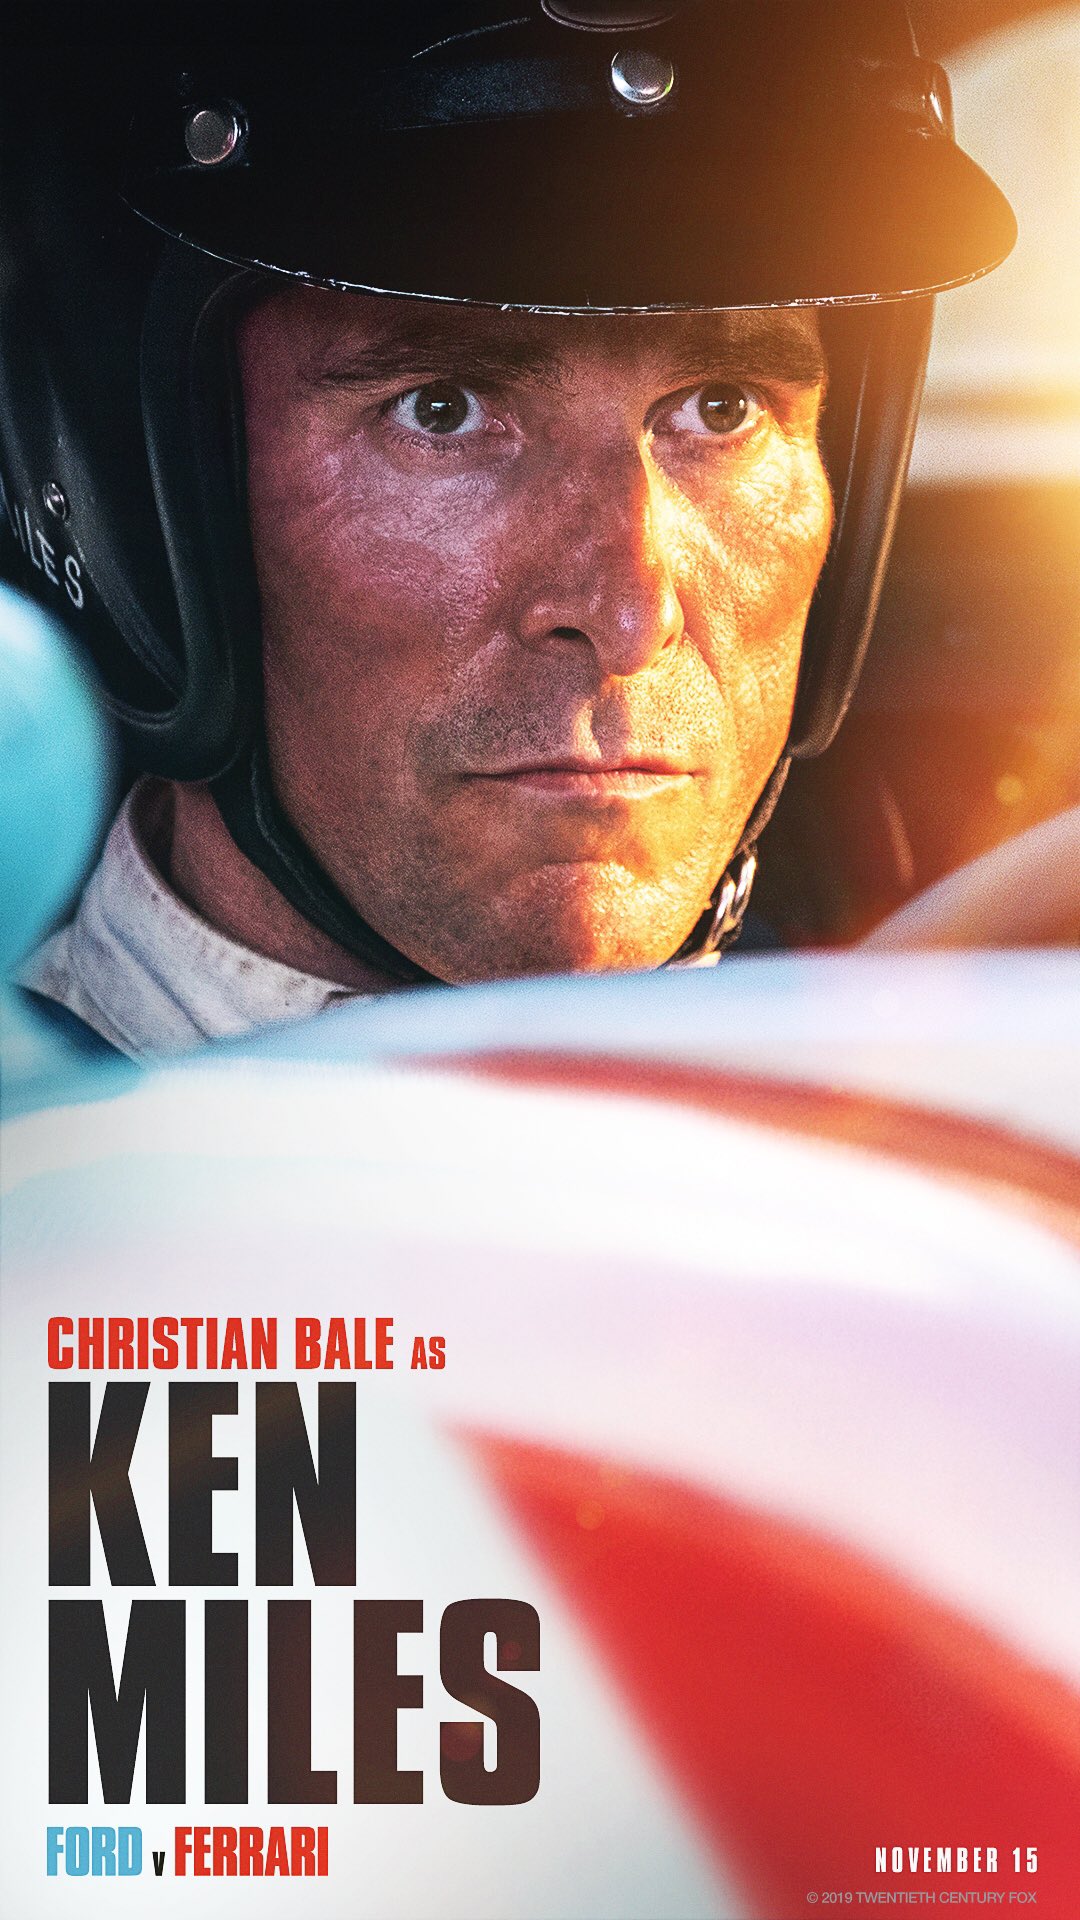 Christian Bale As Ken Miles In Ford V Ferrari Looks Hauntingly